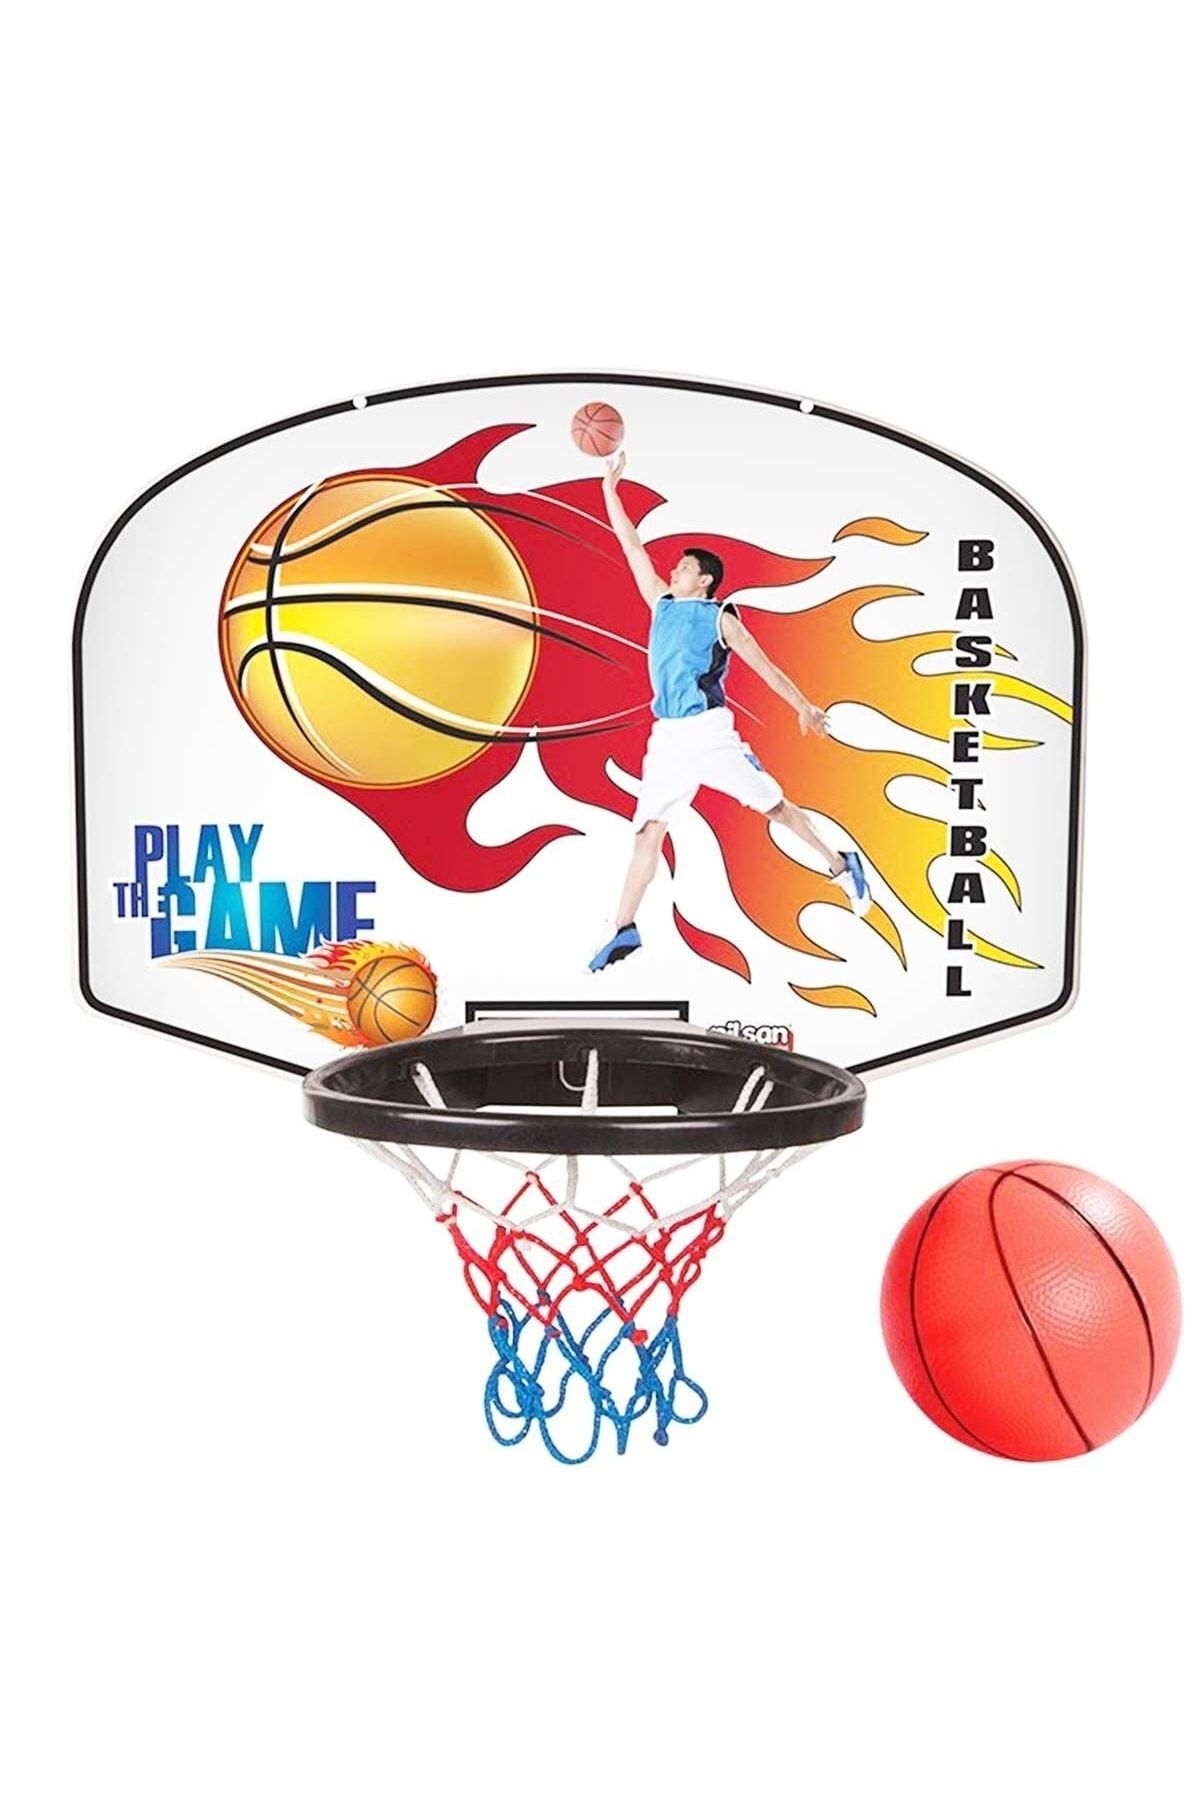 PİLSAN Pilsan Süper Basketbol Seti Askılı 03-400